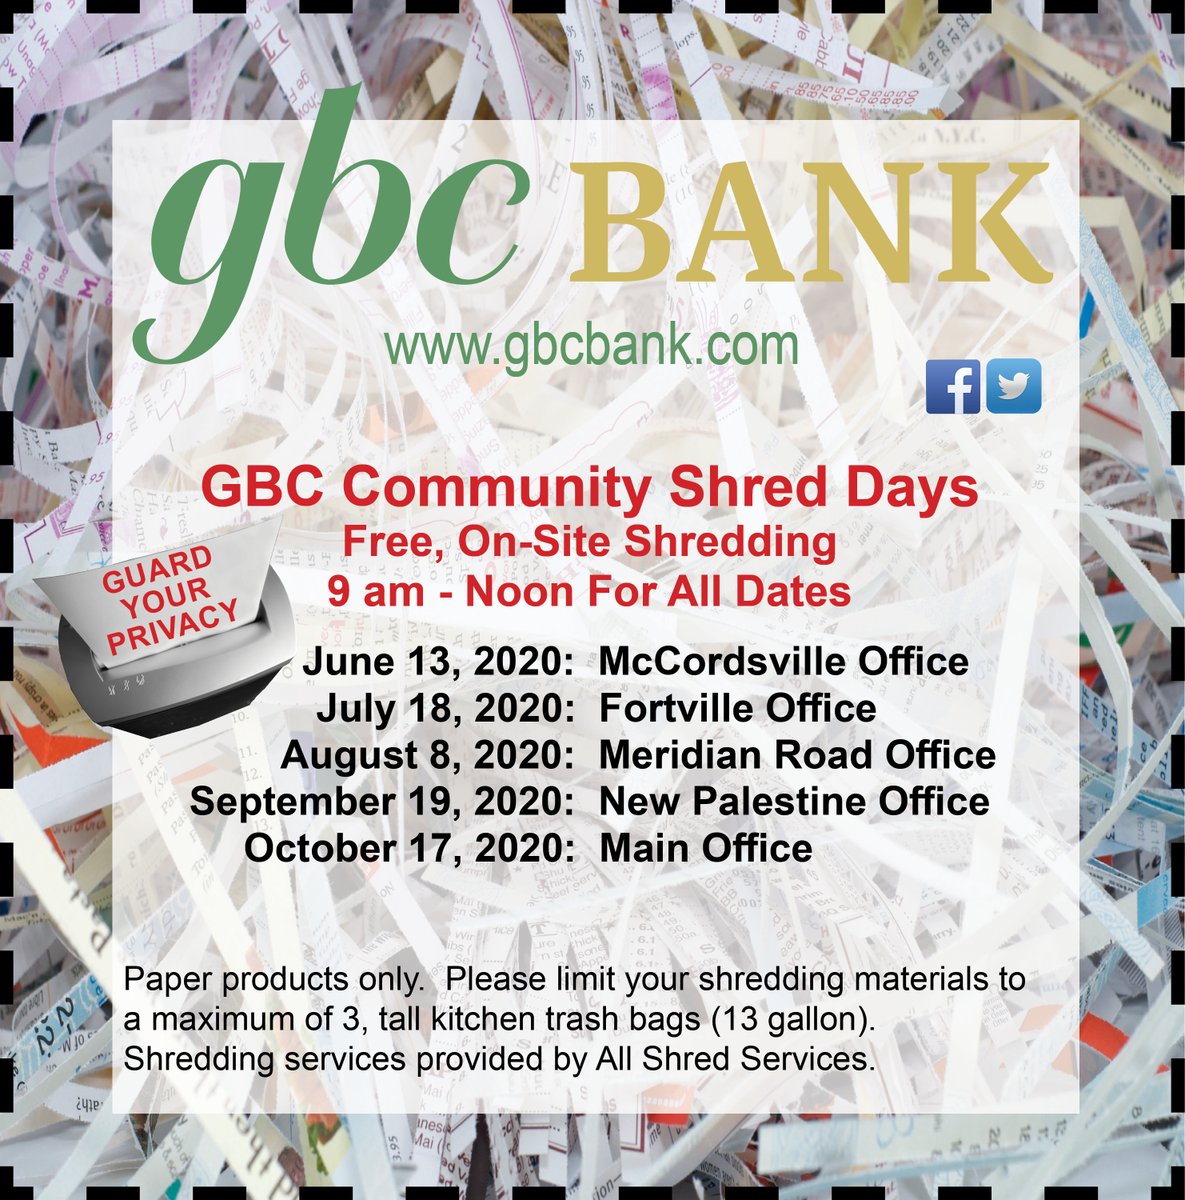 Greenfield Banking Gbcbank Twitter